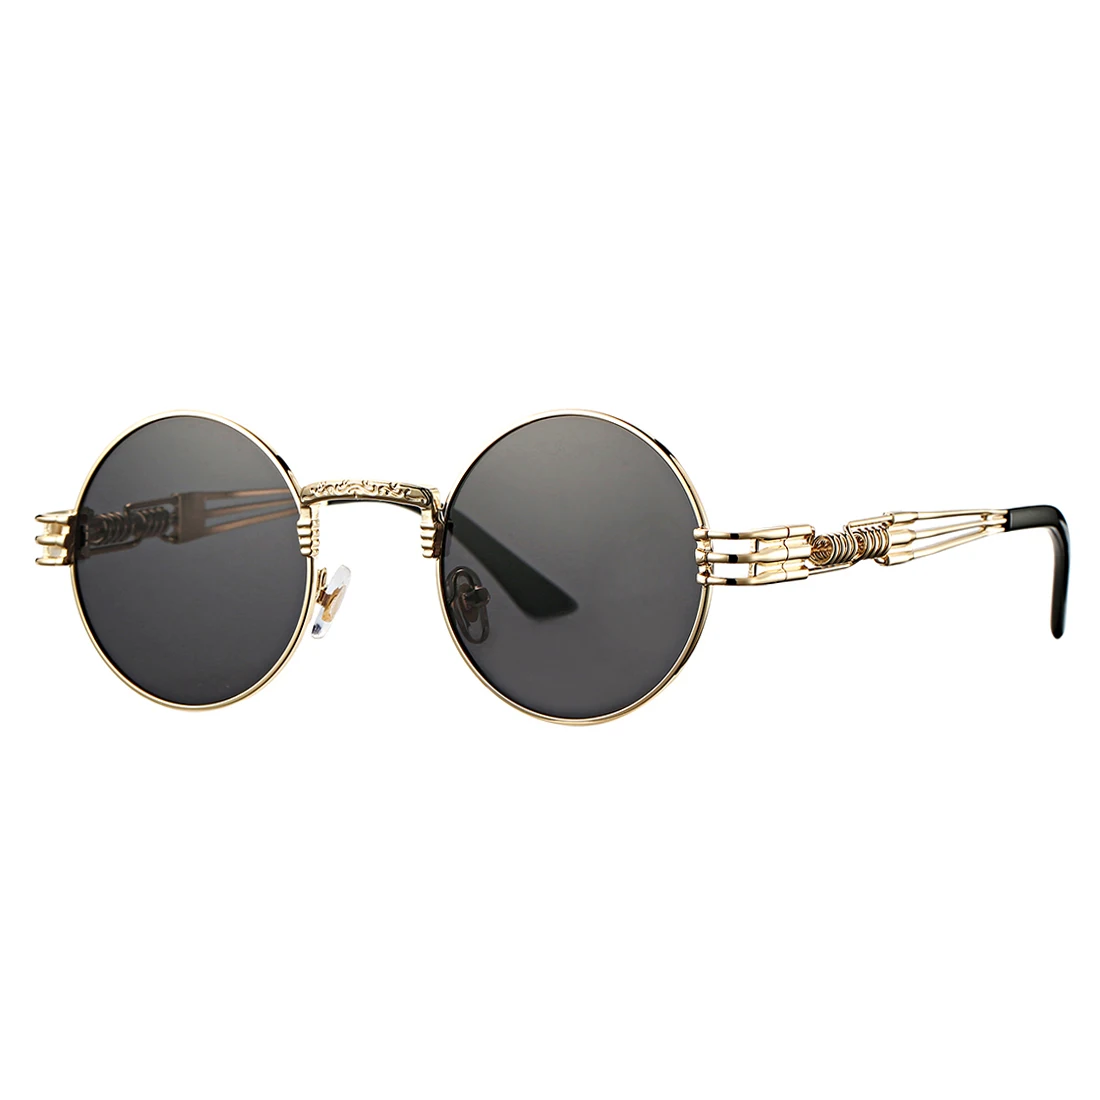 

Steampunk Sunglasses Round Frame Trend Ladies Sunglasses Men's Travel Street Shot Glasses sunglasses 2022, Picture shows